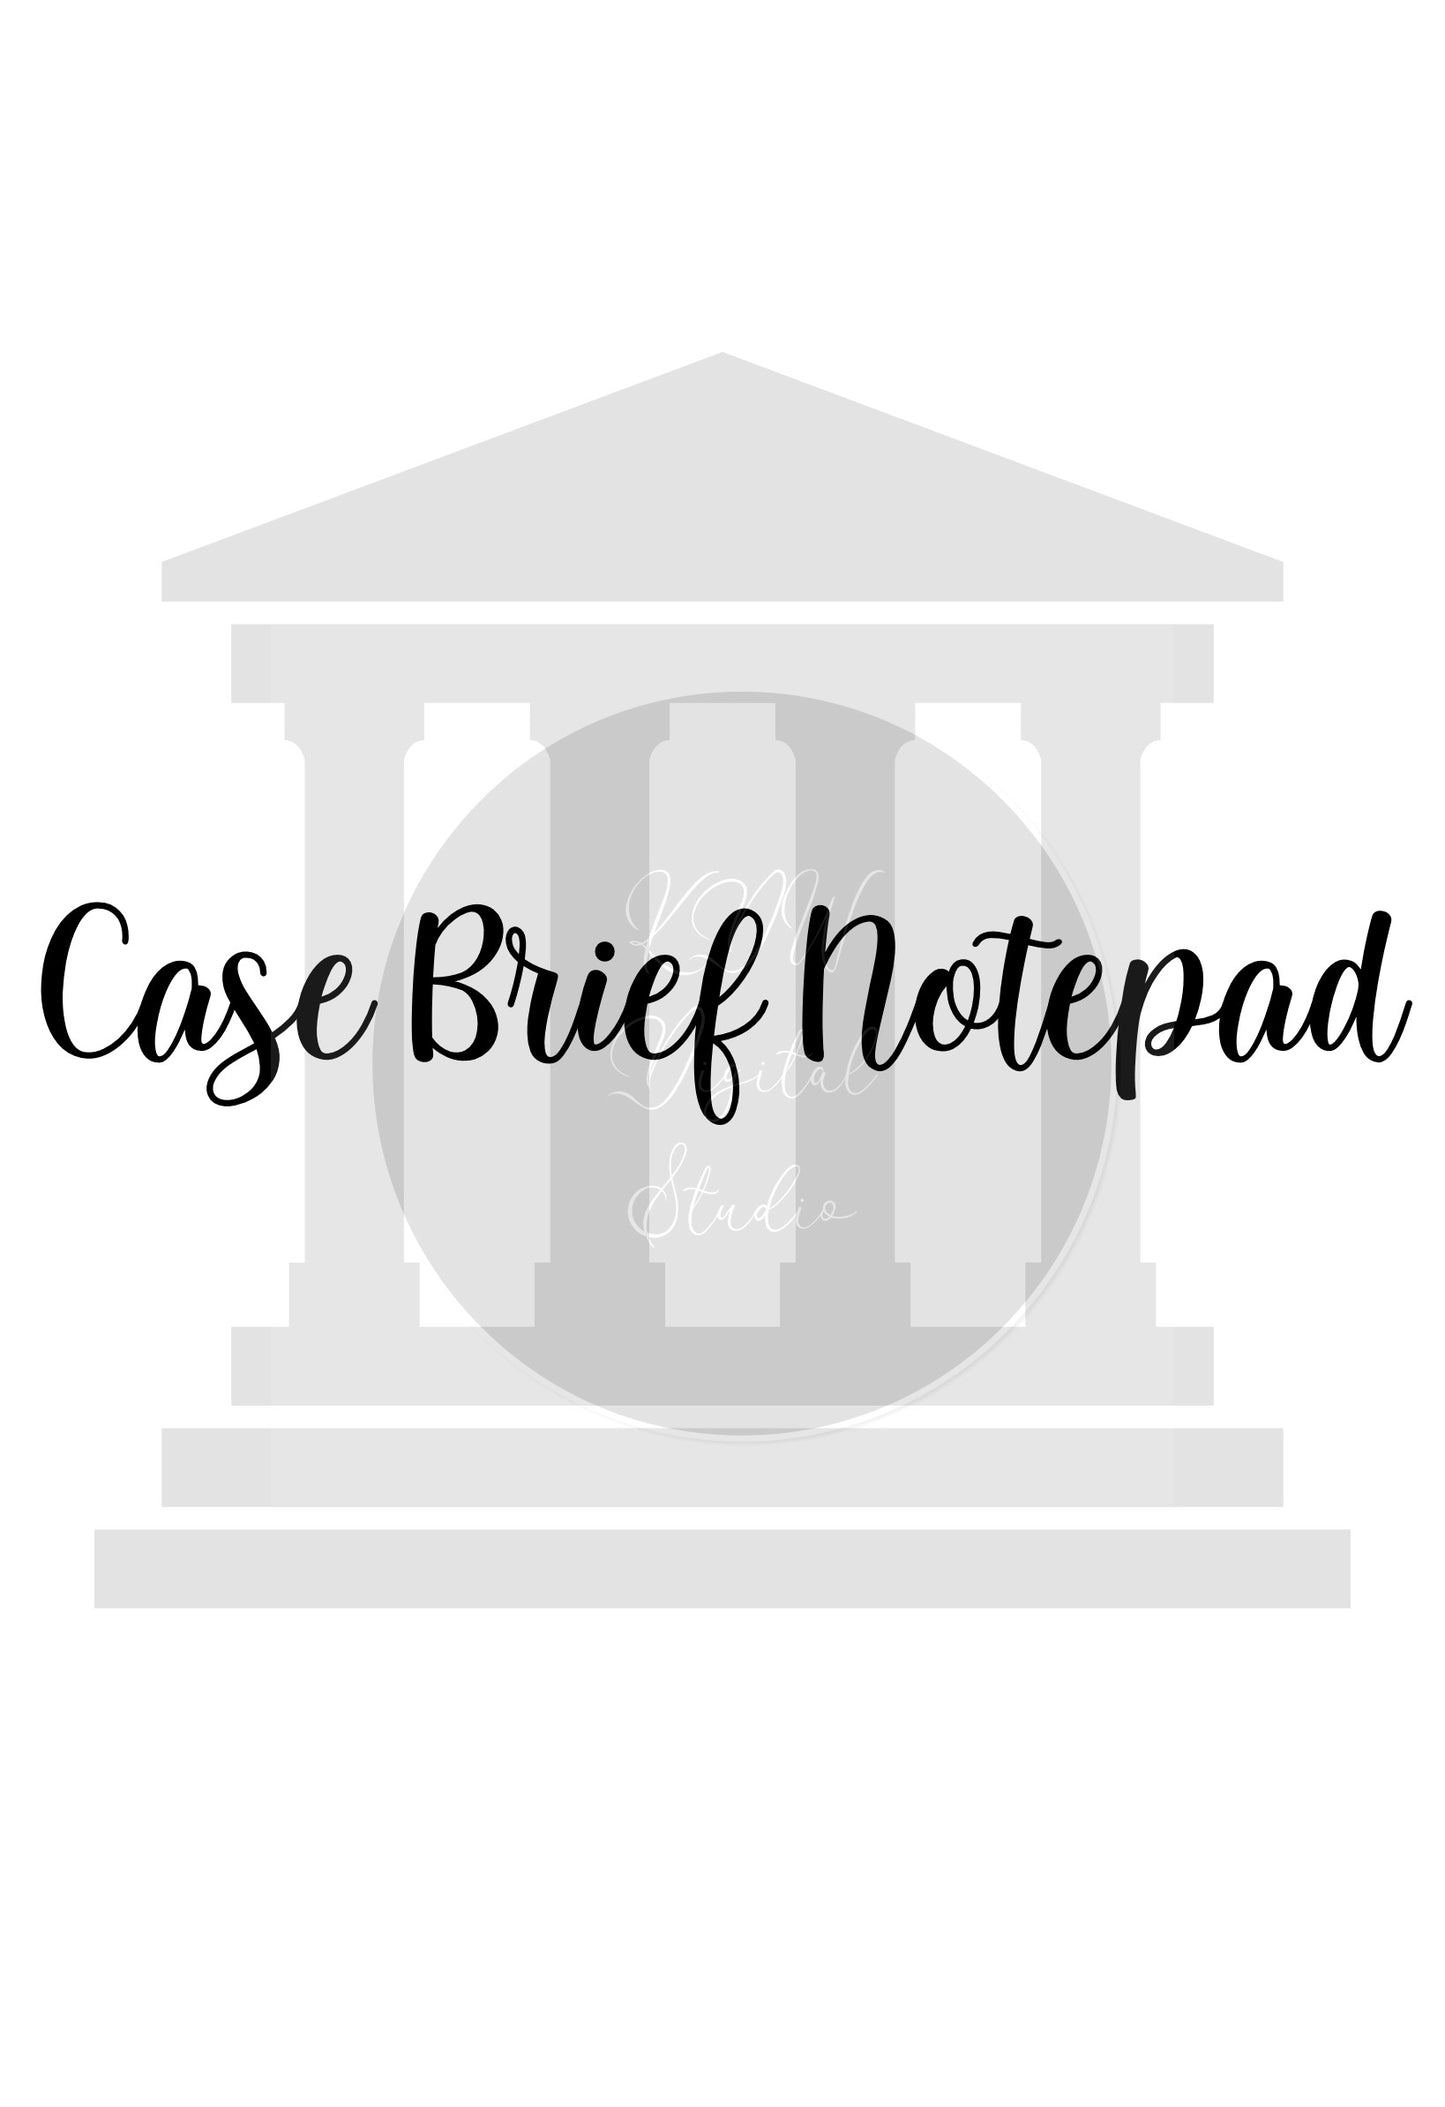 Case Brief Notepad (Digital)